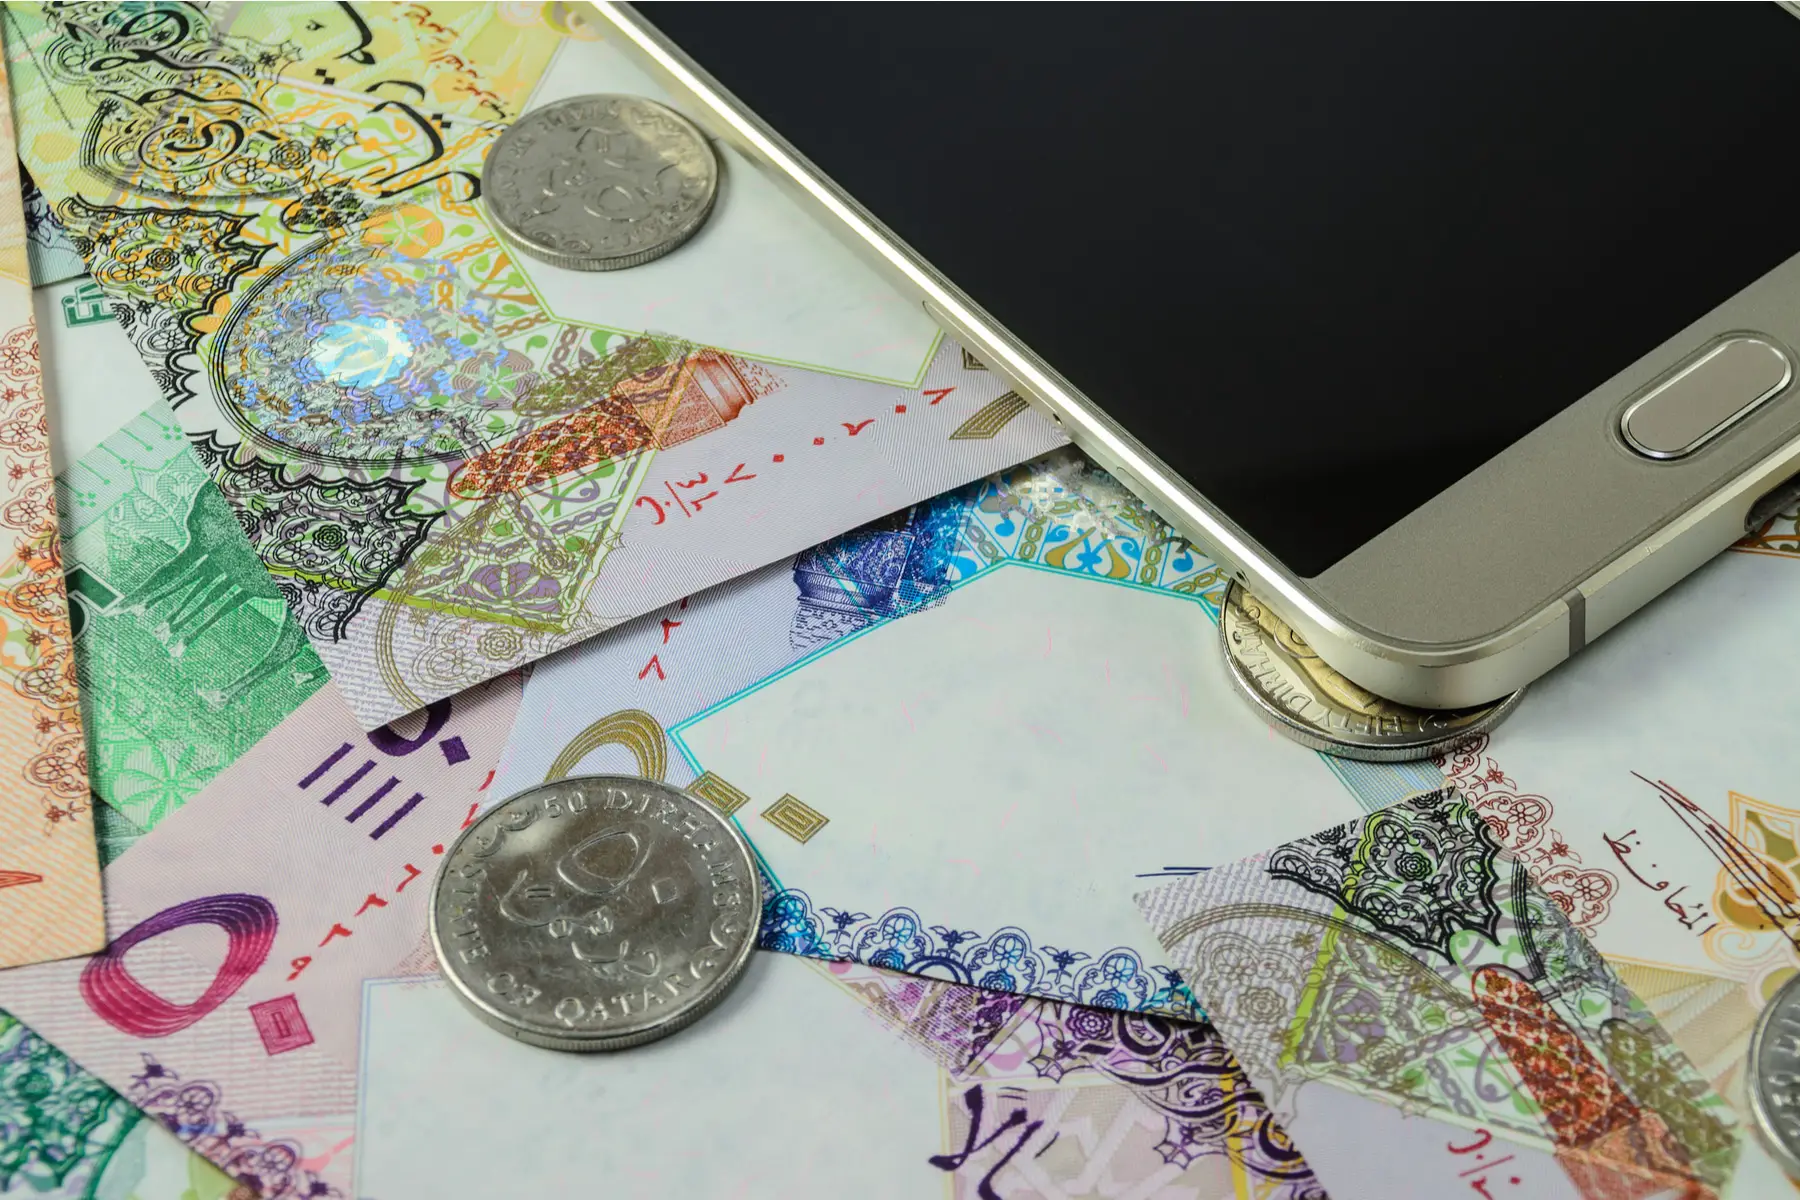 Qatari money and a mobile phone